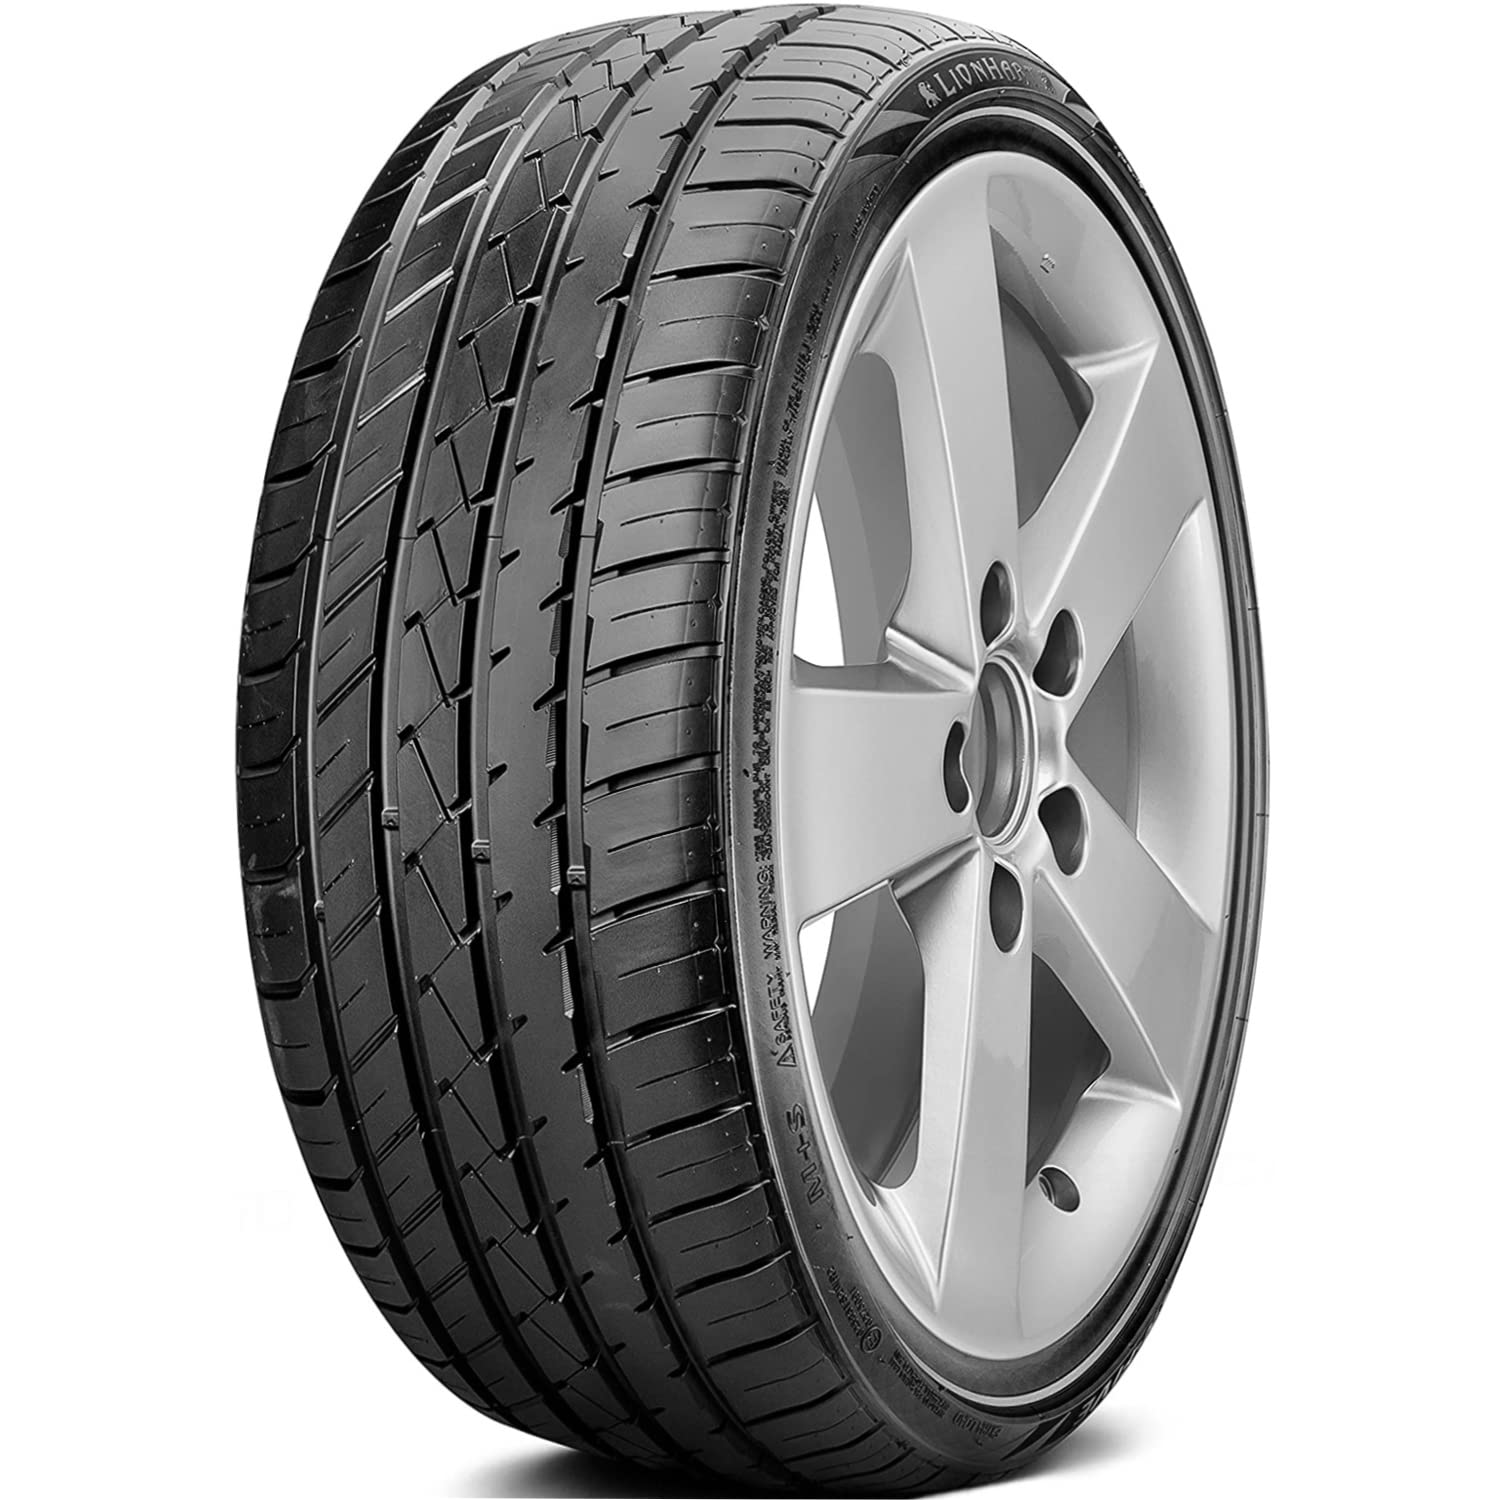 LIONHART LH-FIVE 285/30ZR20 (26.8X11.2R 20) Tires